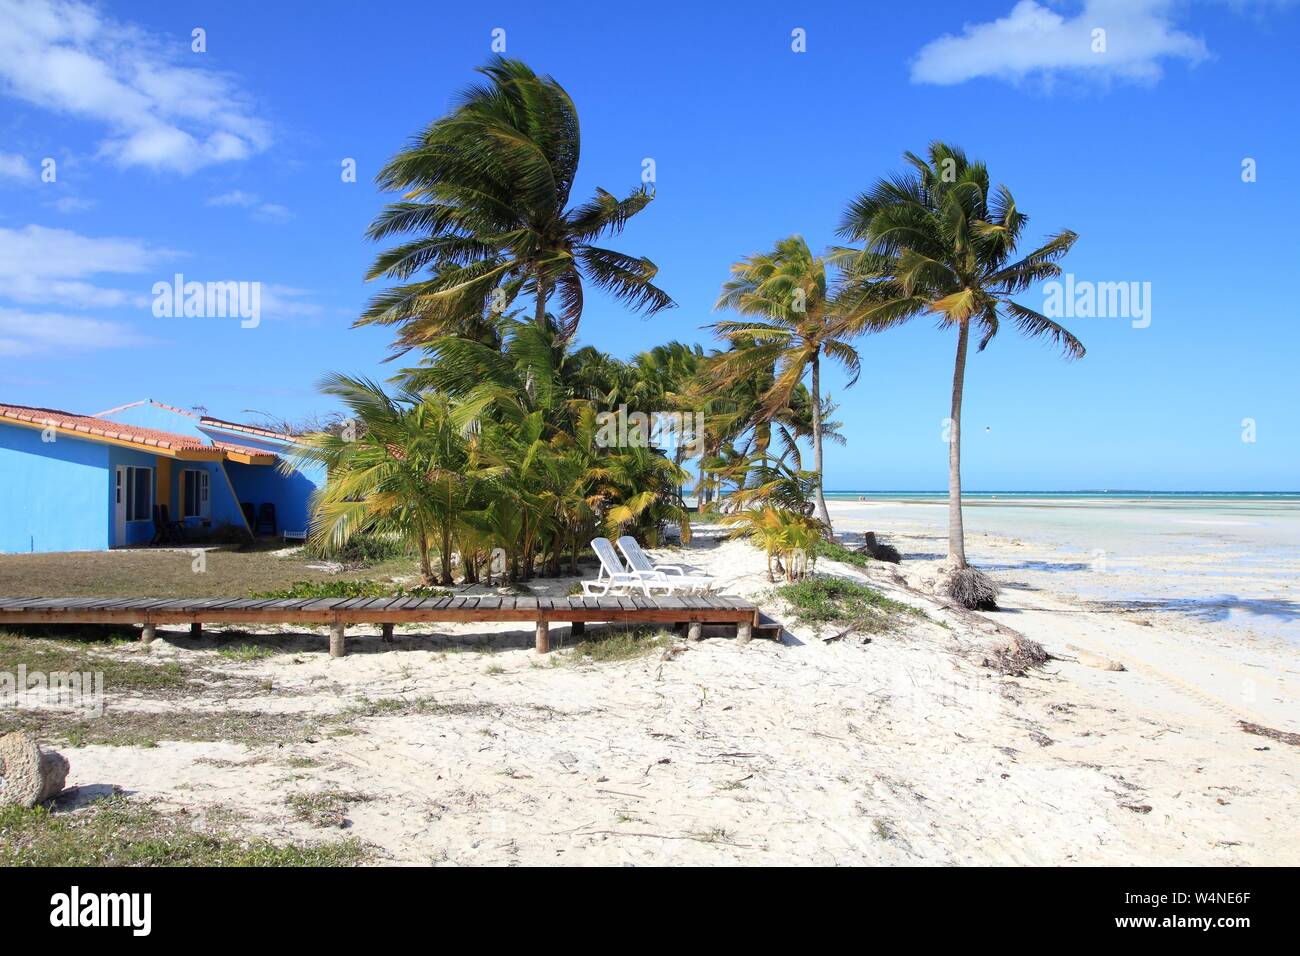 Cuba beach landscape - palm trees in Cayo Guillermo (Jardines del Rey). Stock Photo